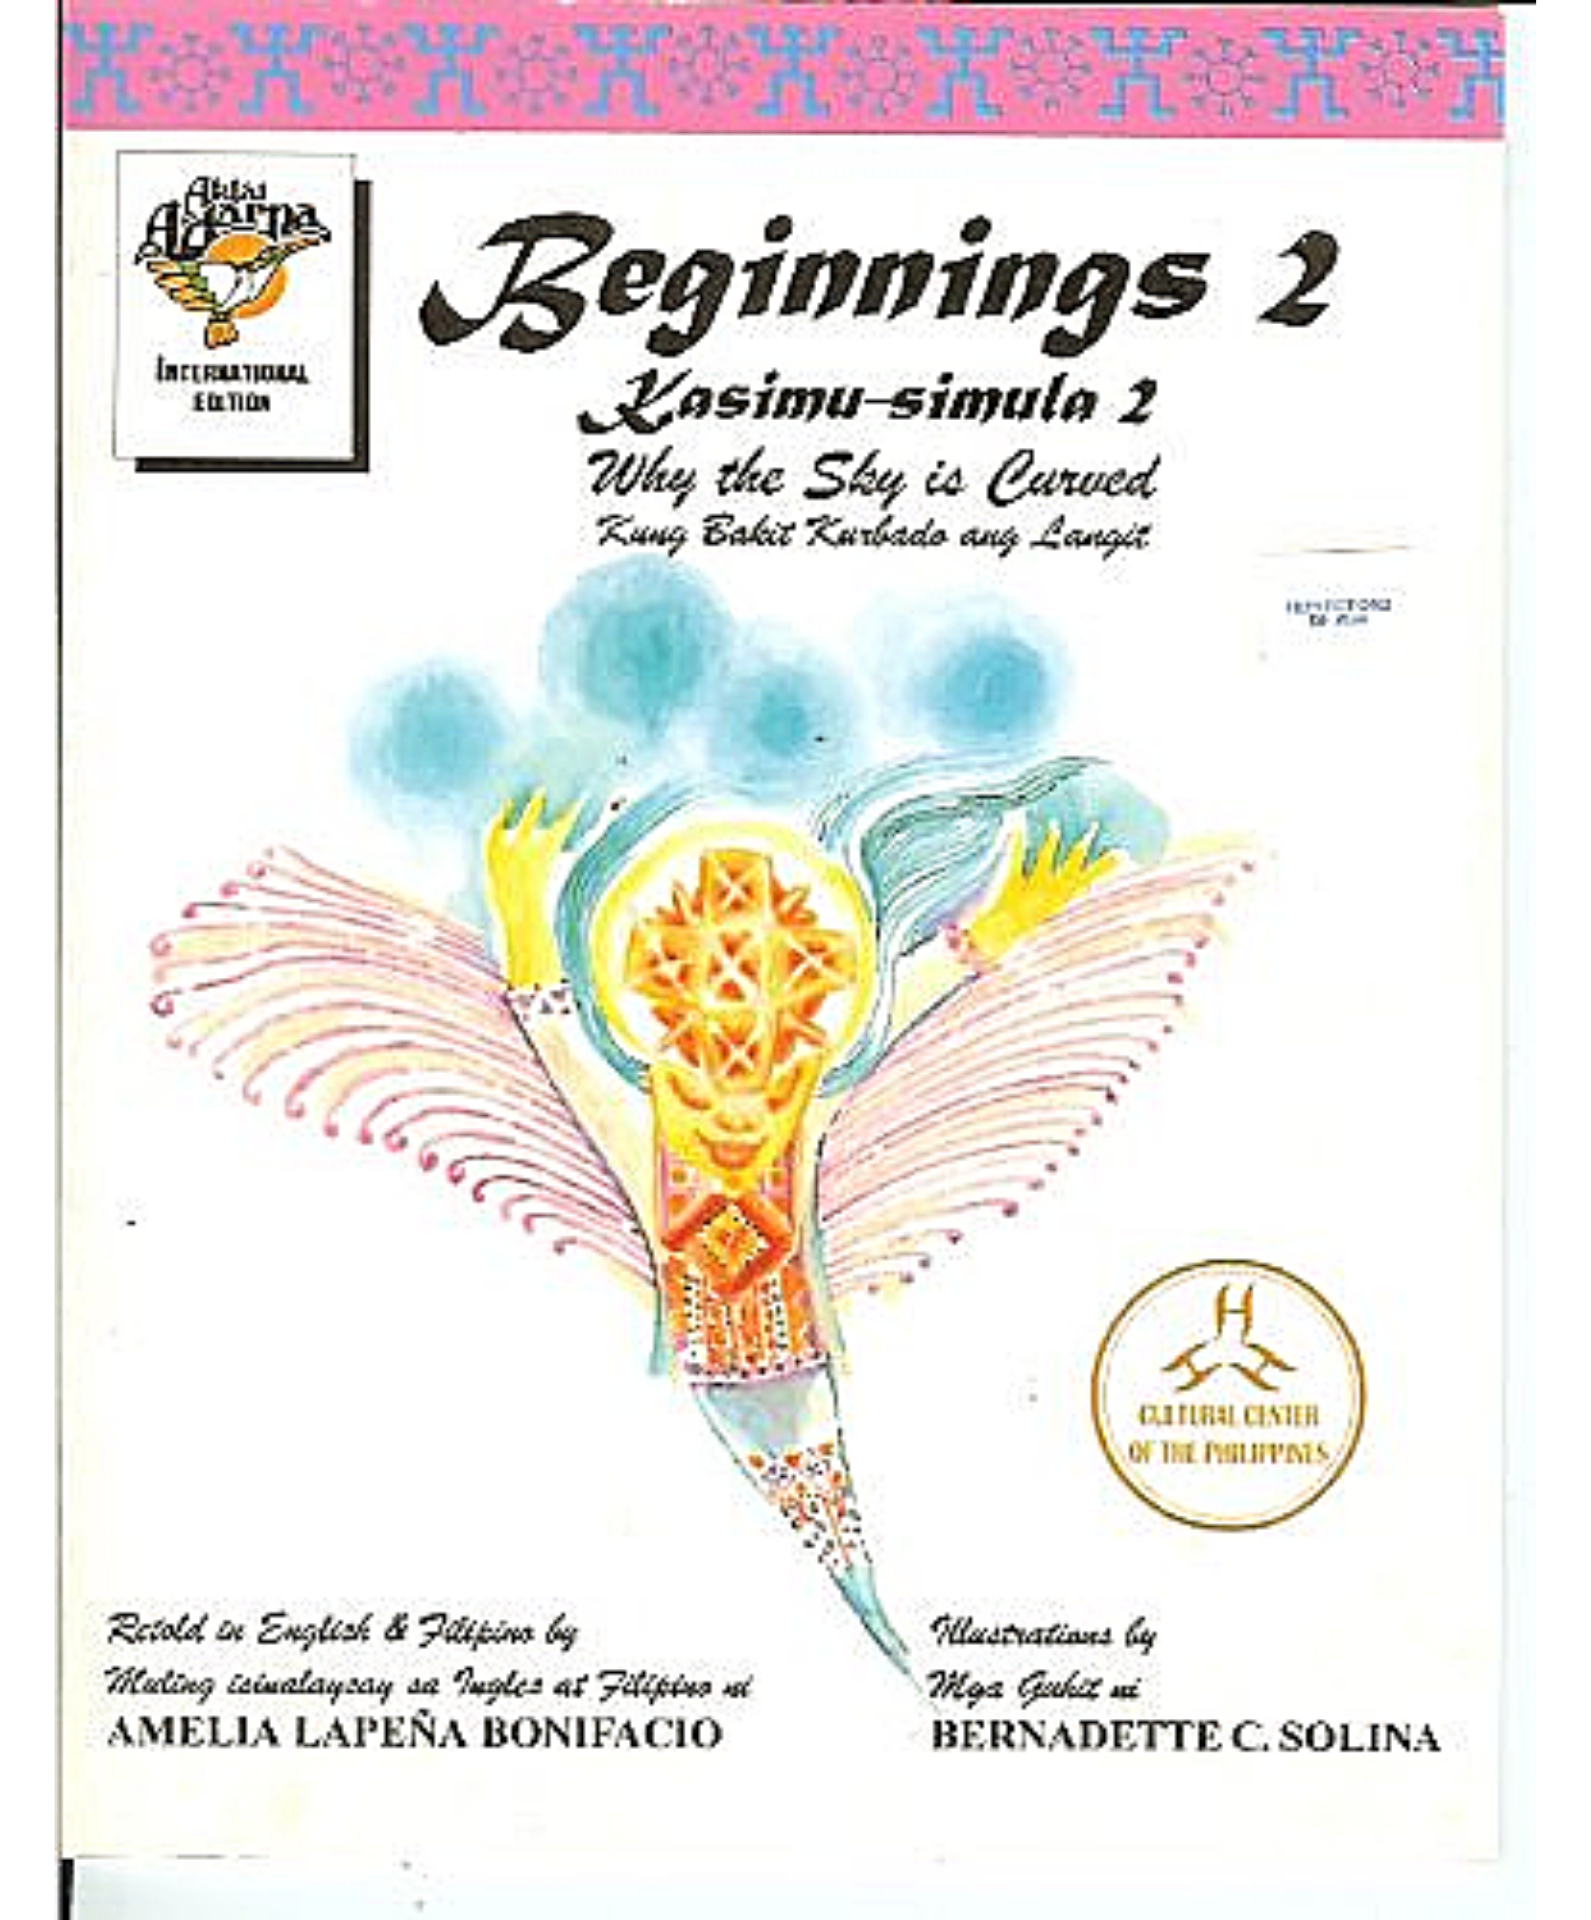 Beginnings 2 Kasimu-simula 2 (Why the Sky is Curved) (Kung Bakit Kurbado ang Langit)